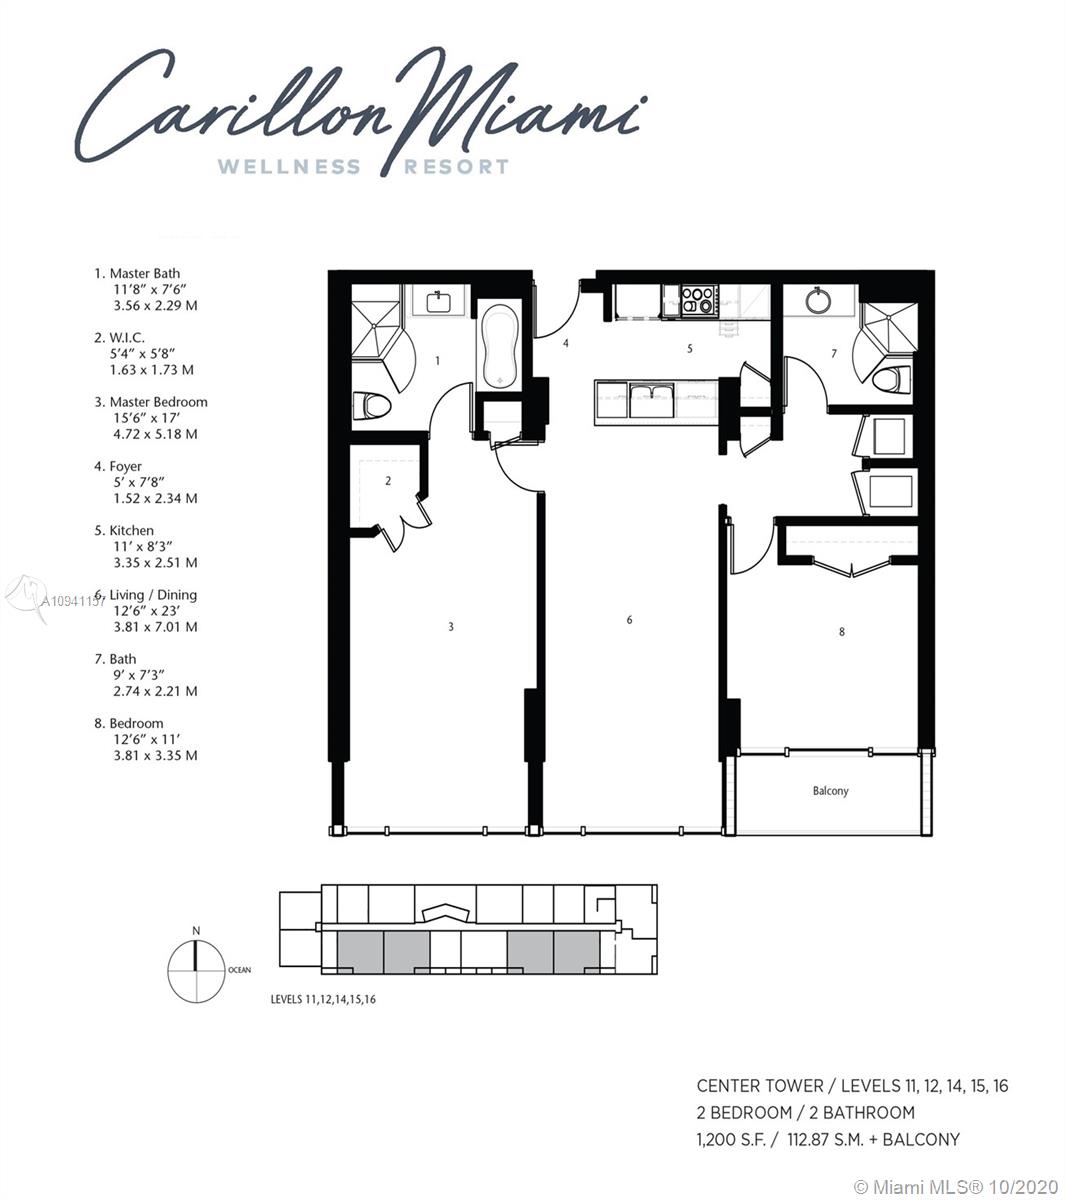 Carillon Center Tower Wellness Resort & Residences image #11